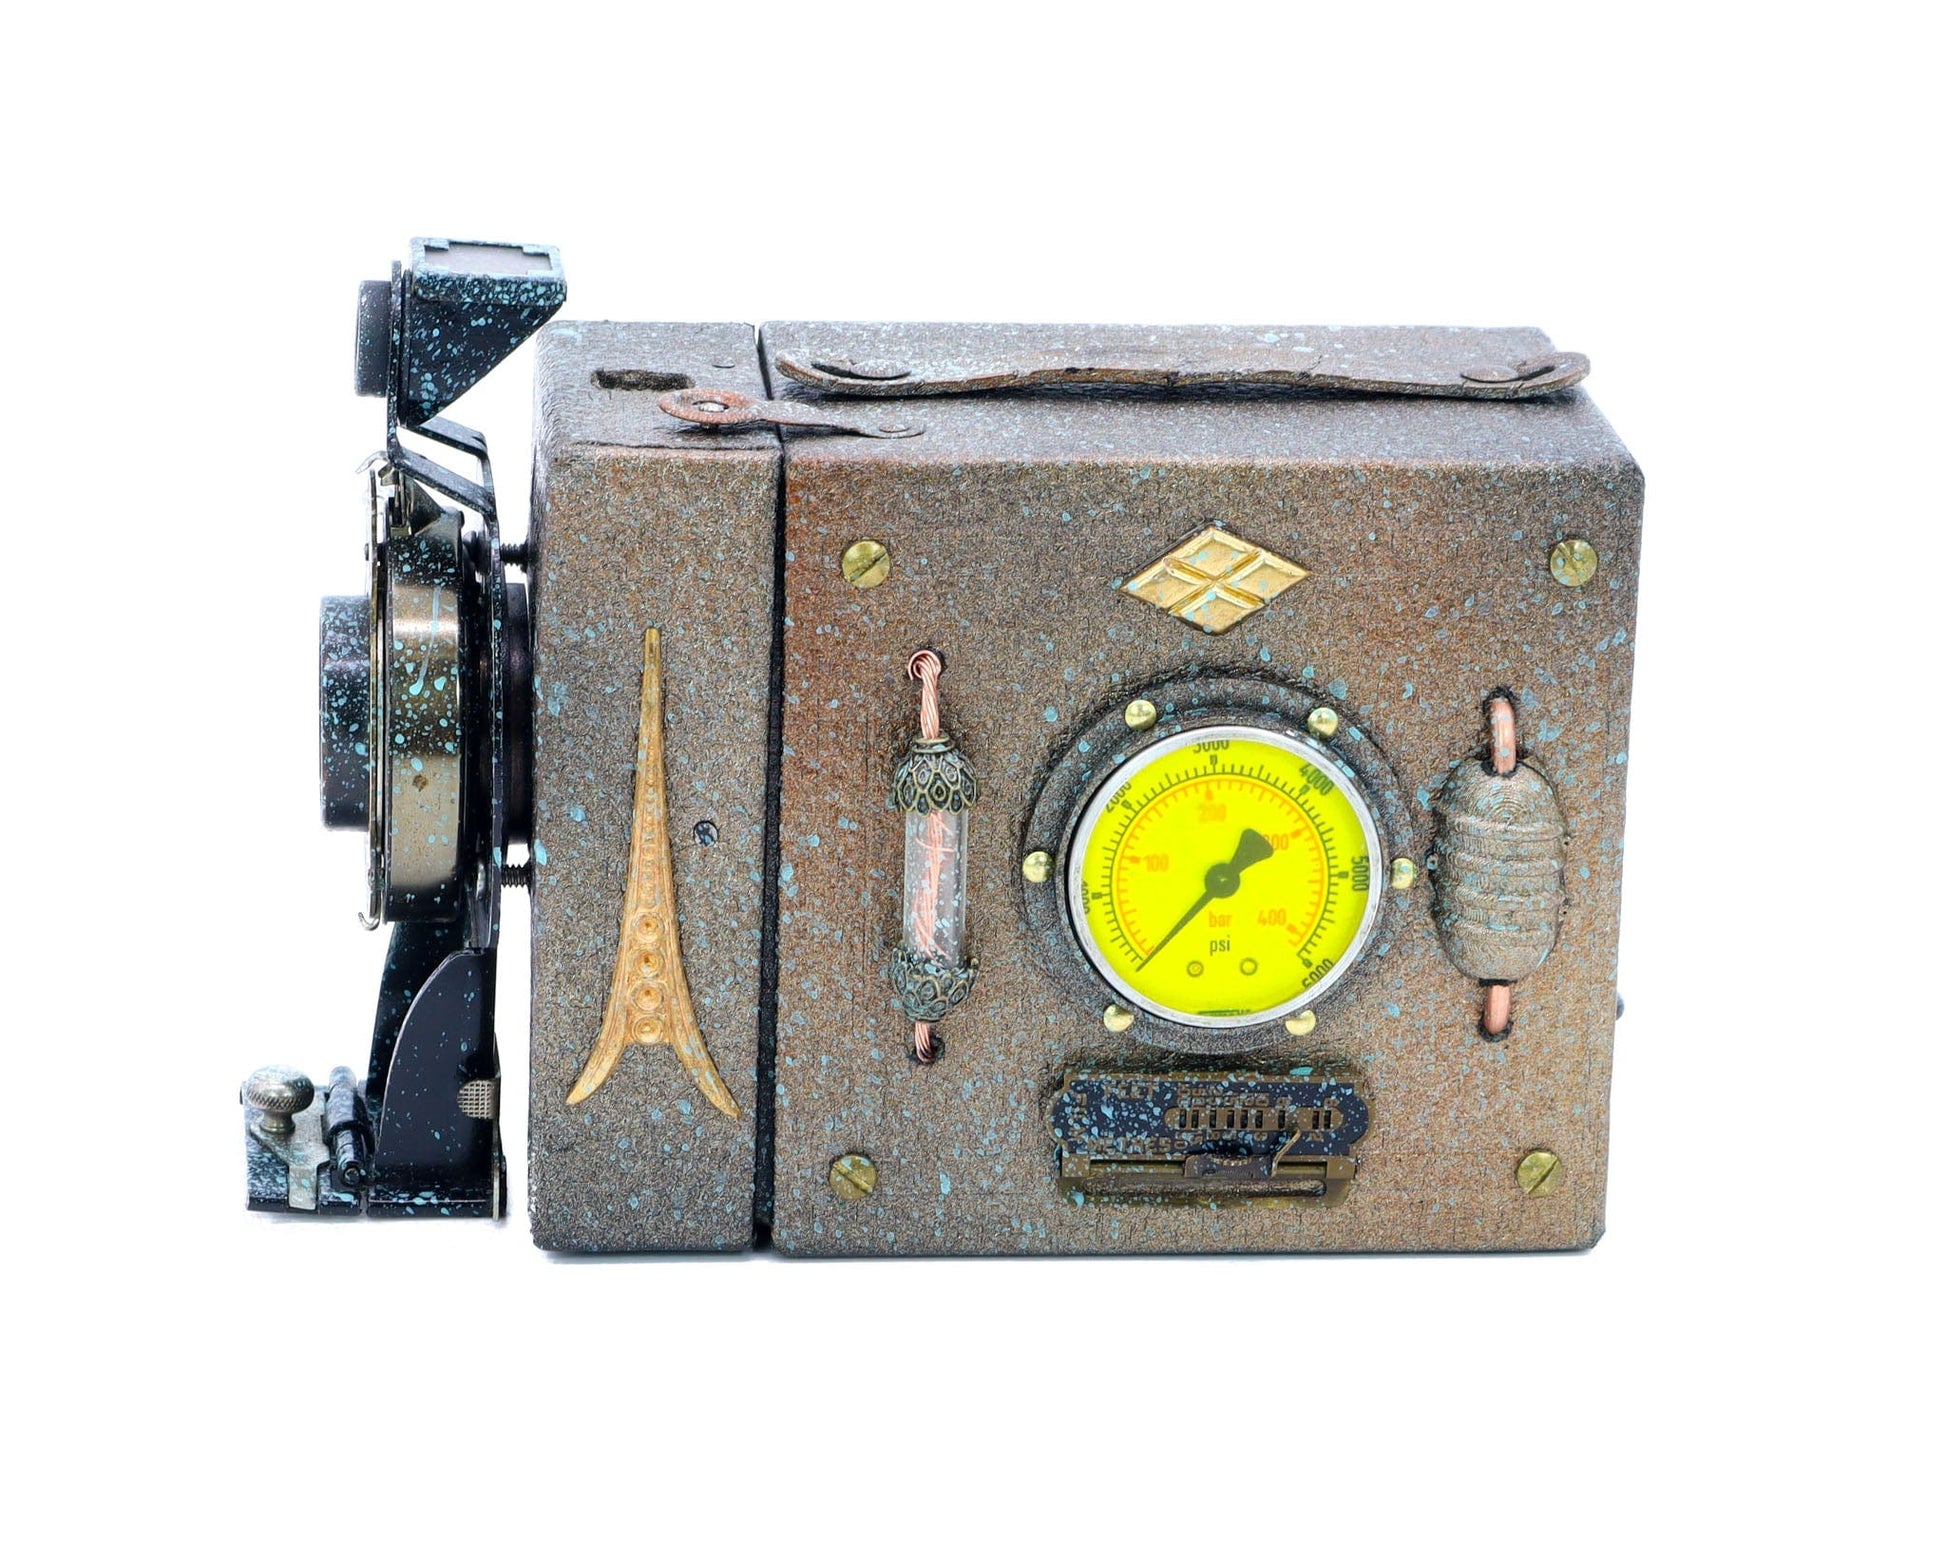 LightAndTimeArt Steampunk Speaker The Lost Treasure - Steampunk Bluetooth Speaker, Kodak Box Camera, Gifts for Geeks, Electronic Audio gadget, signed & numbered artwork